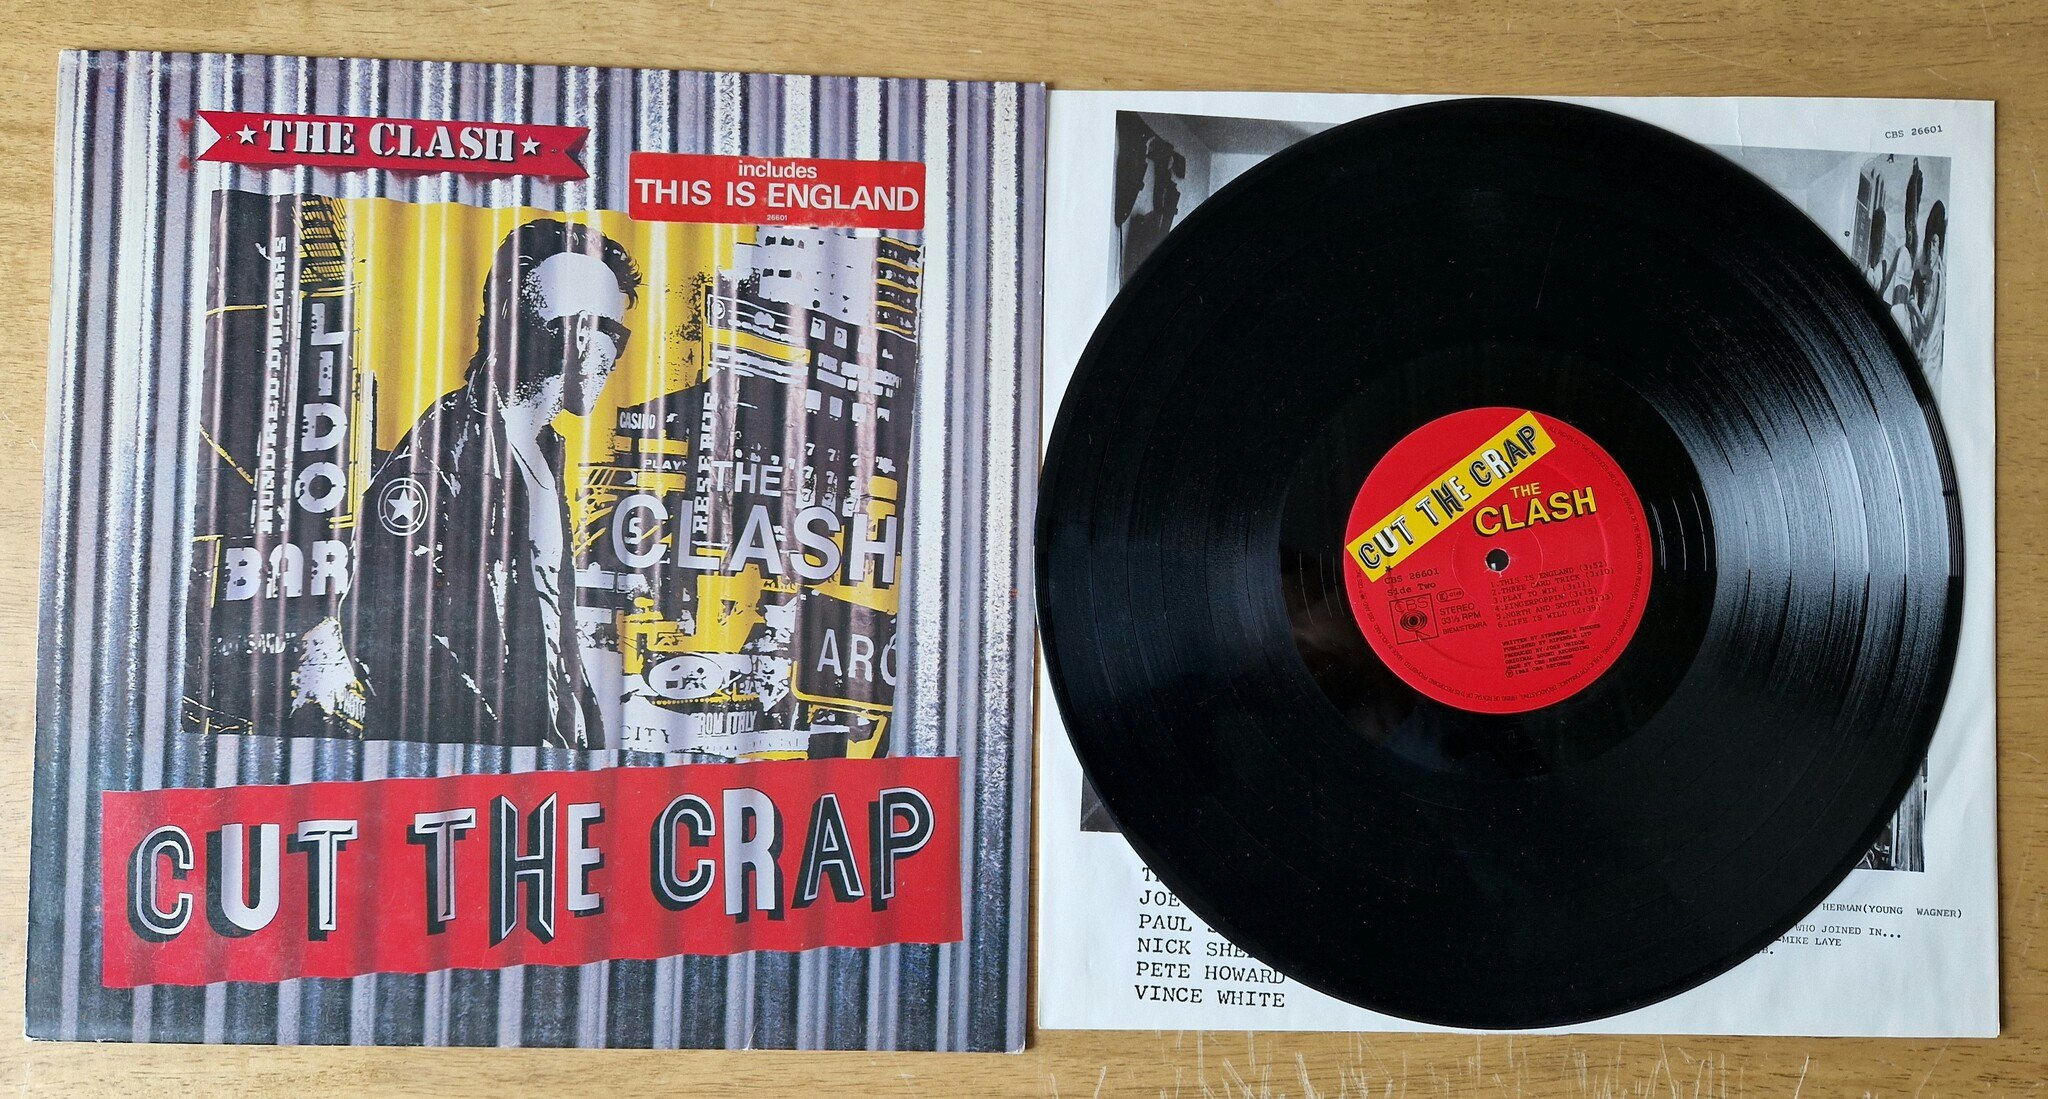 The Clash, Cut the crap. Vinyl LP